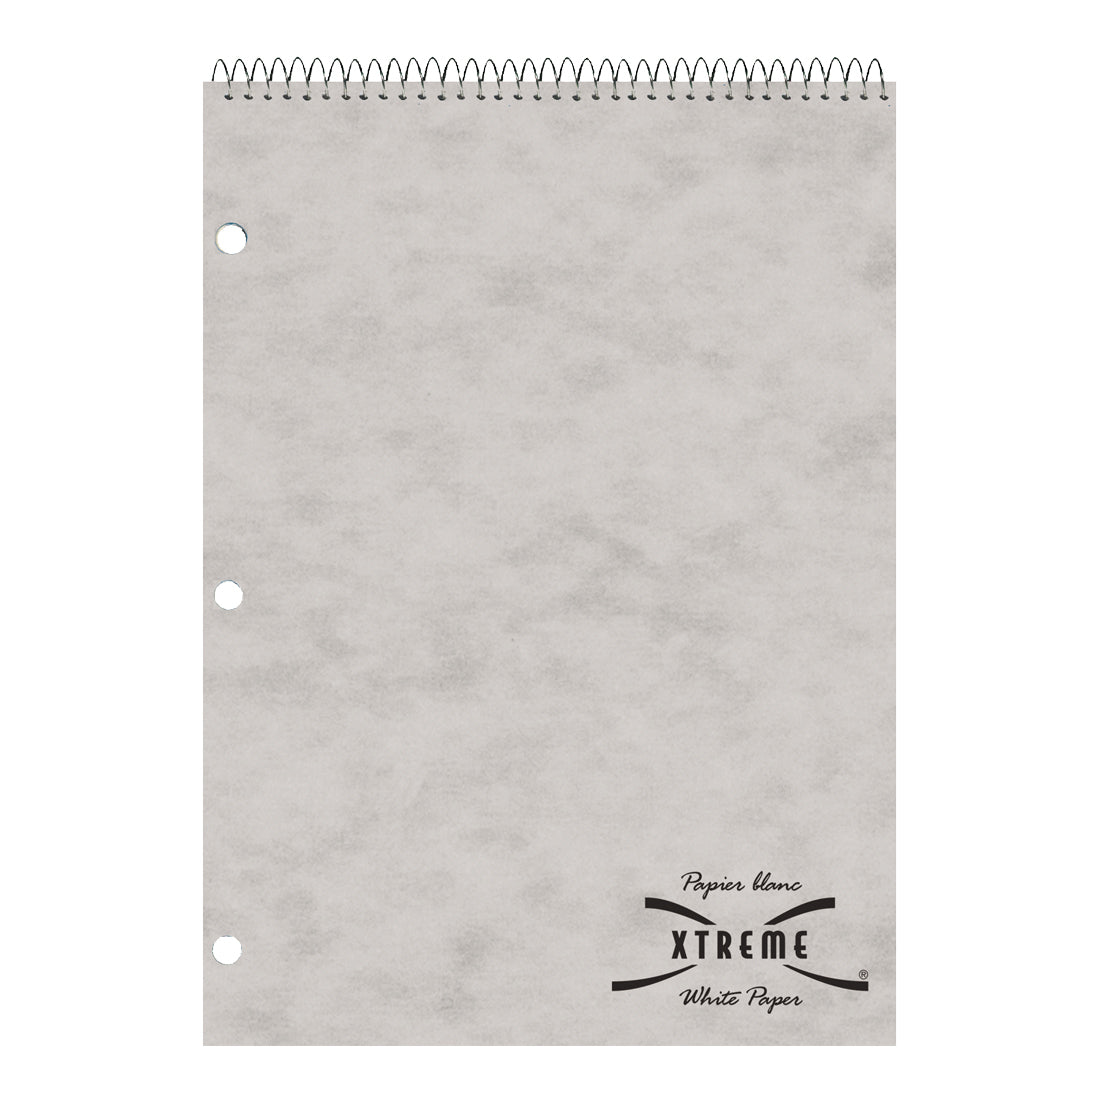 Xtreme White Porta-Desk Notebook 31186